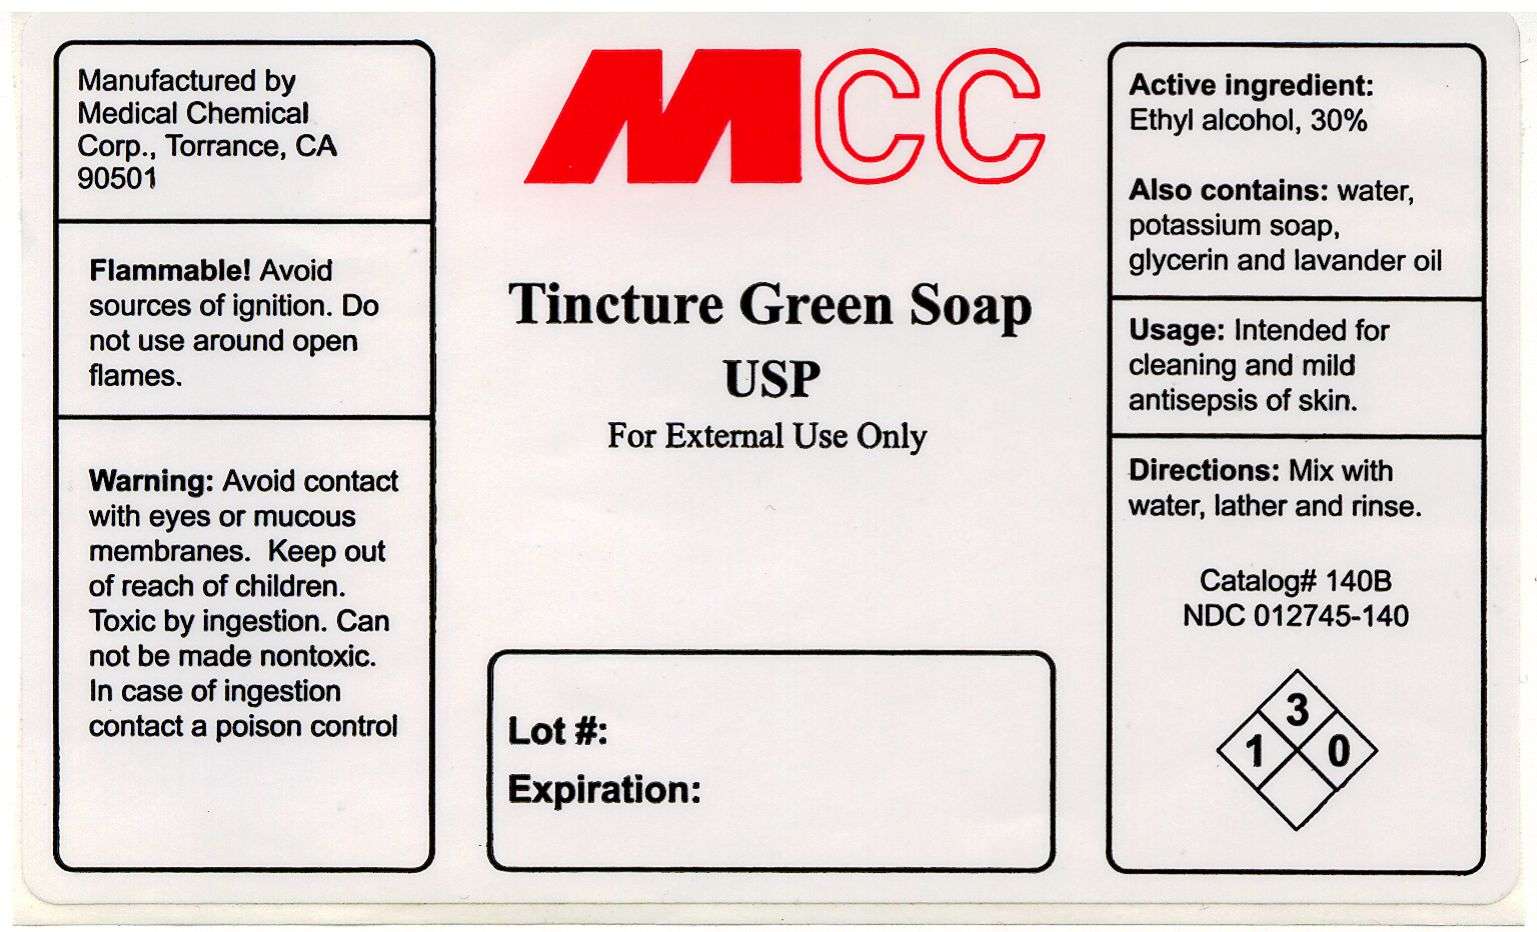 Tincture Green Soap